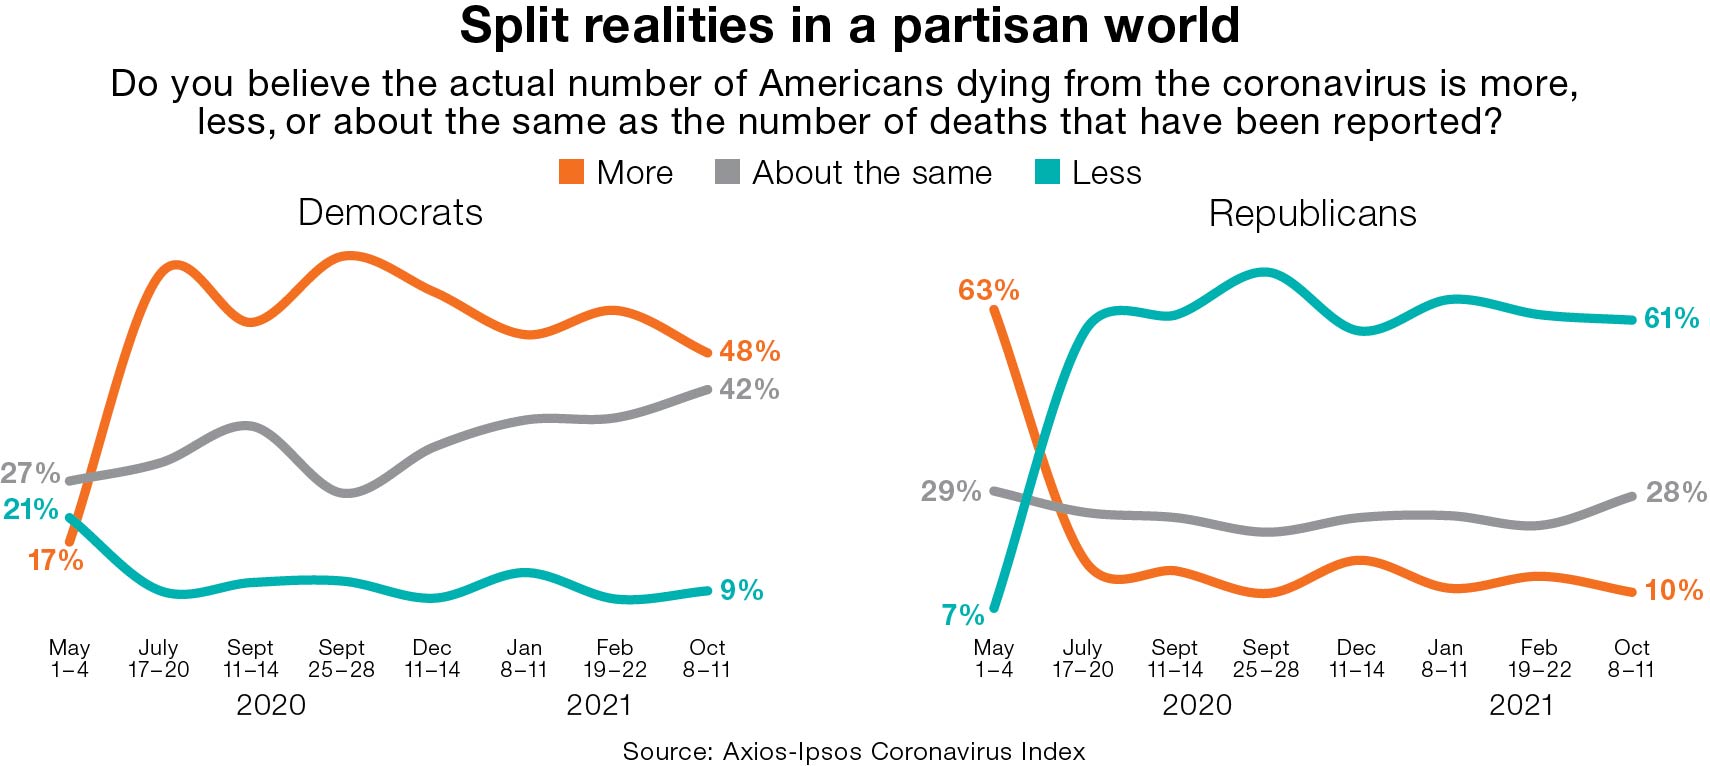 Split realities in a partisan world